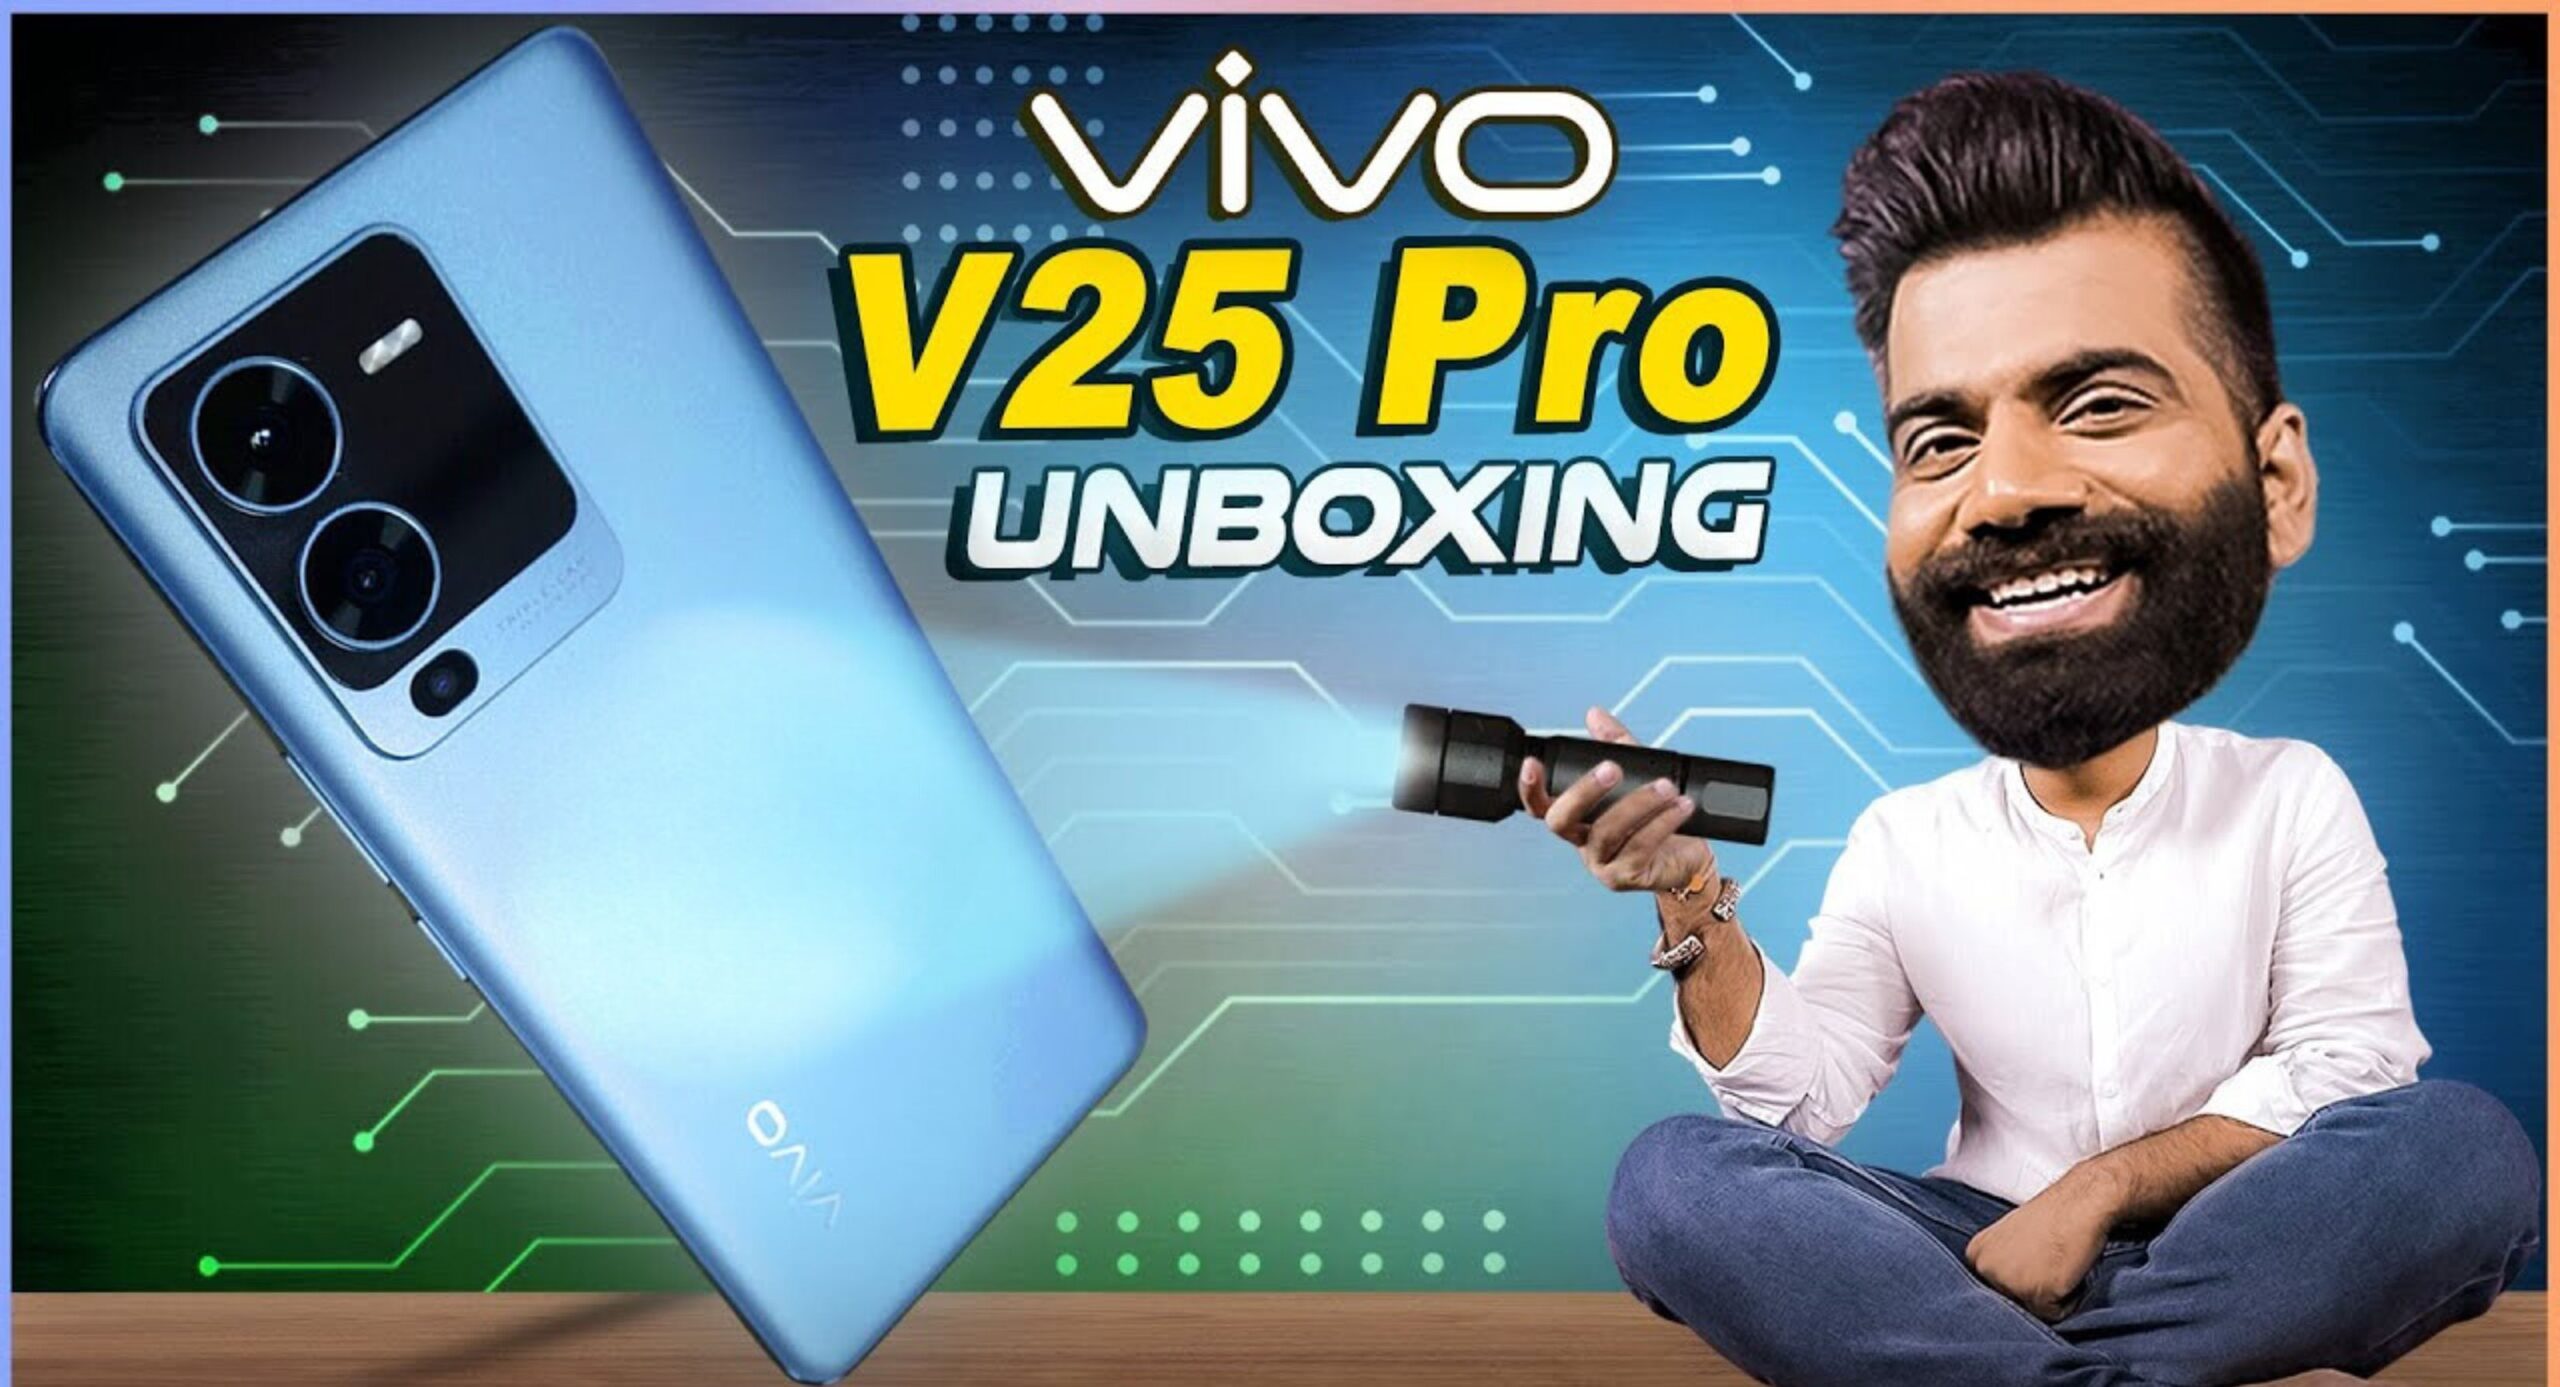 Vivo V25 Pro 5G Smartphone